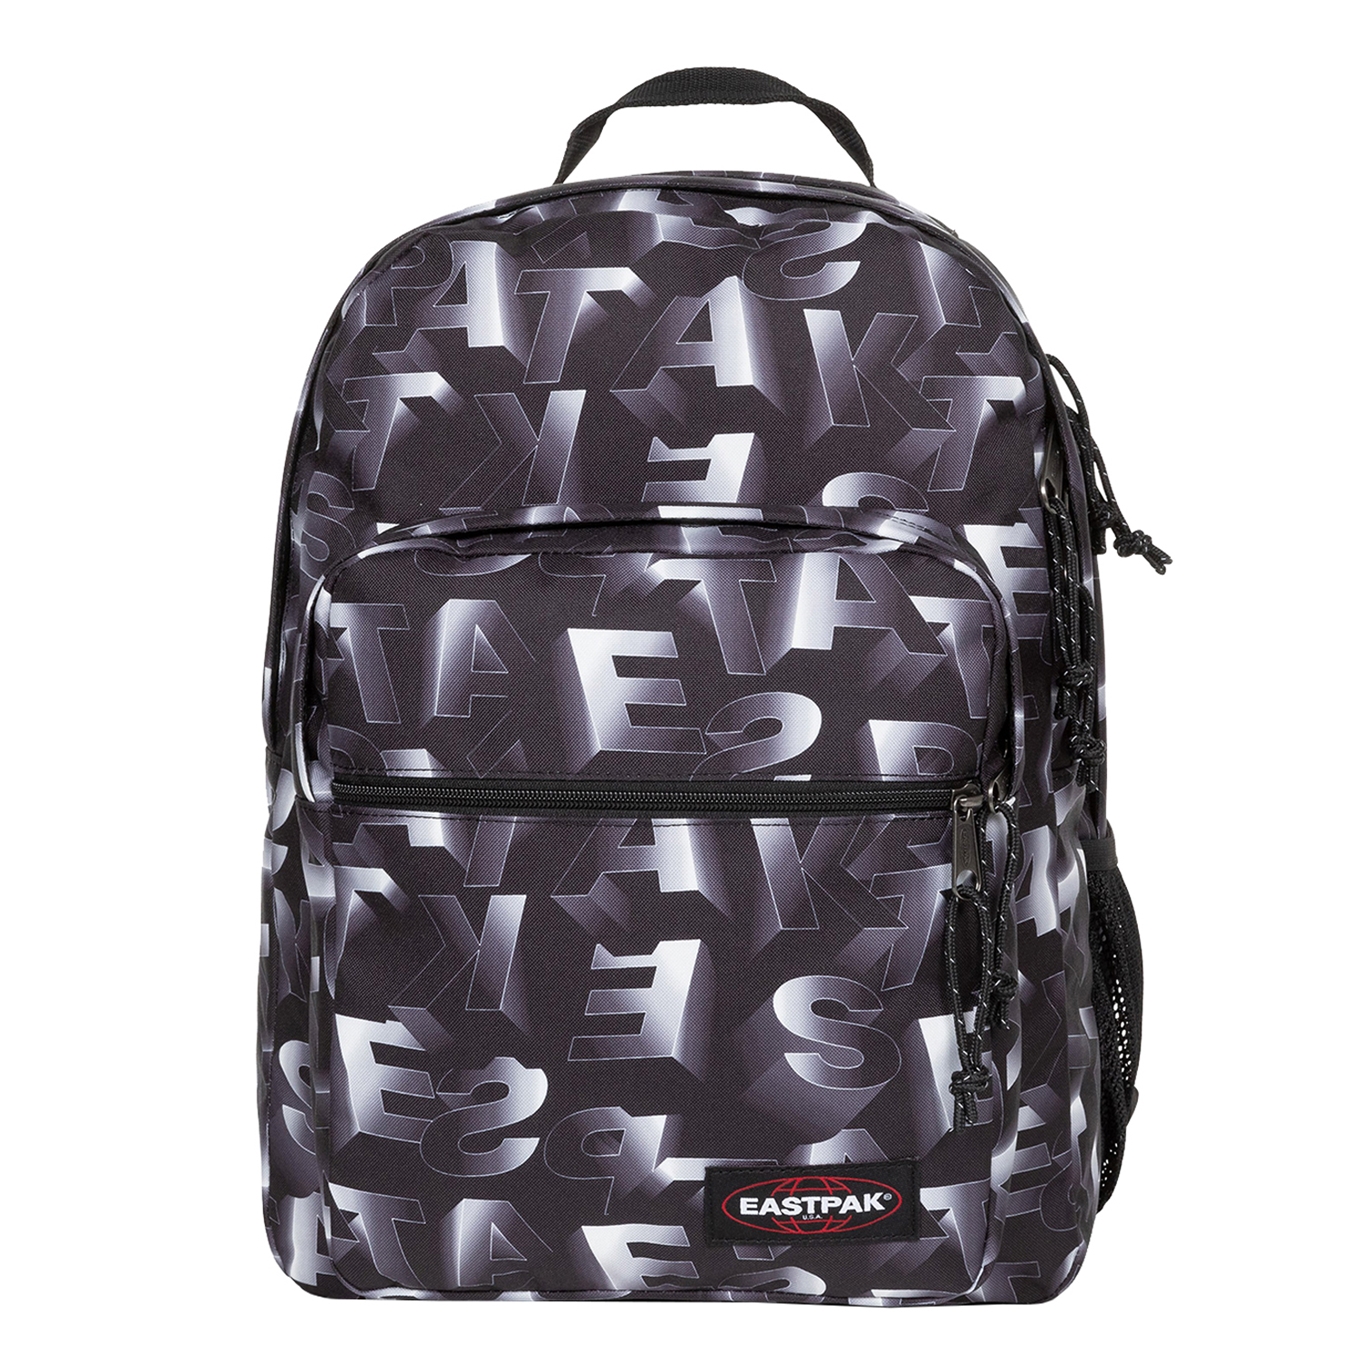 Eastpak Morius blocktype black backpack